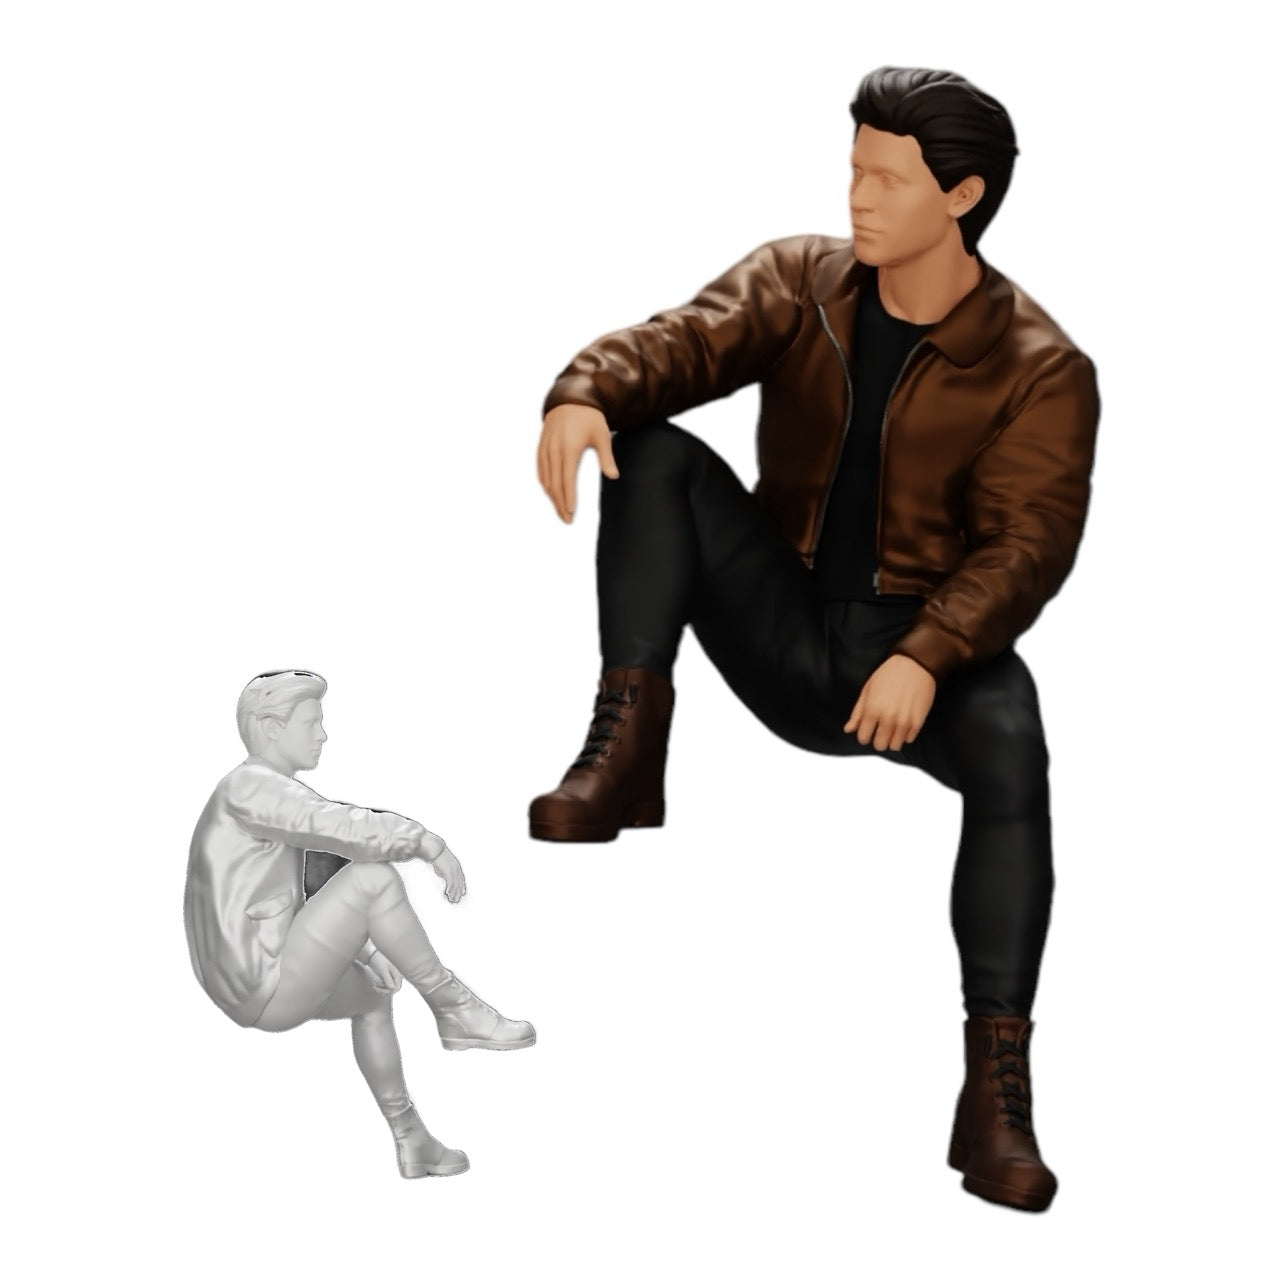 Diorama Modellbau Produktfoto 0: Attraktiver, verträumter junger Mann in Lederjacke sitzt (Ref Nr. A7)